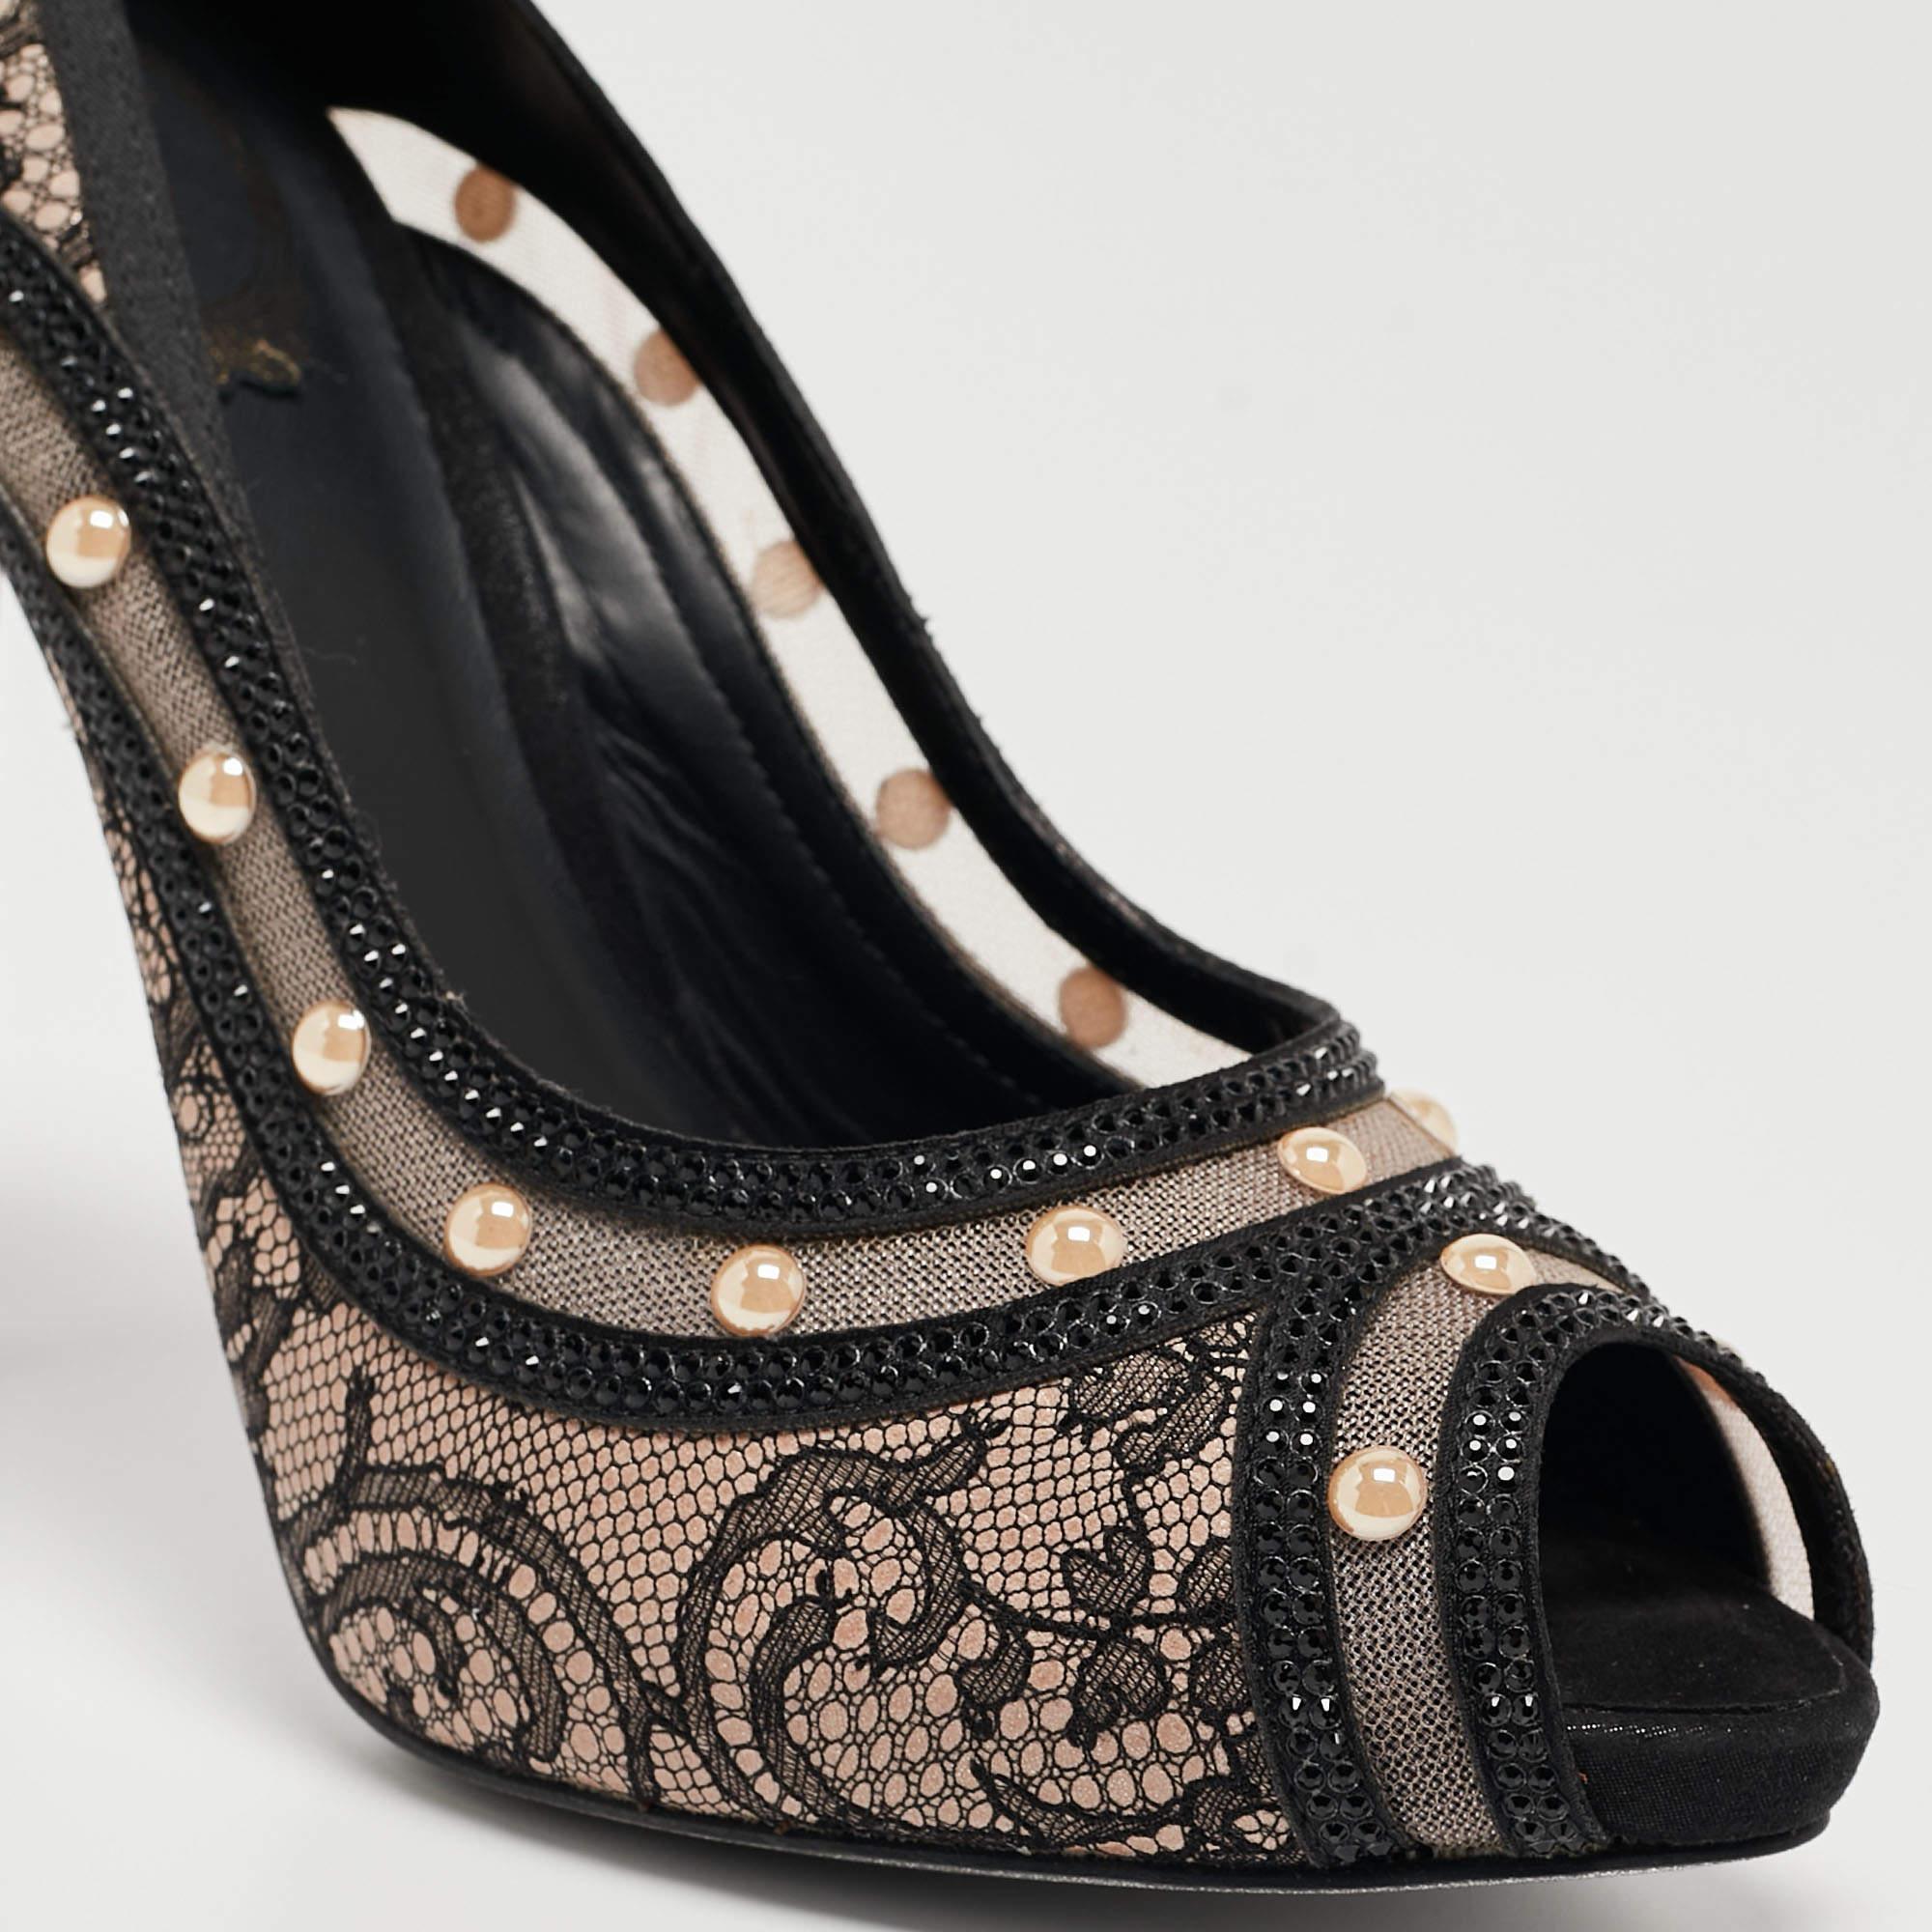 René Caovilla Black Lace Pearls Embellished Platform Peep Toe Pumps Size 41 3